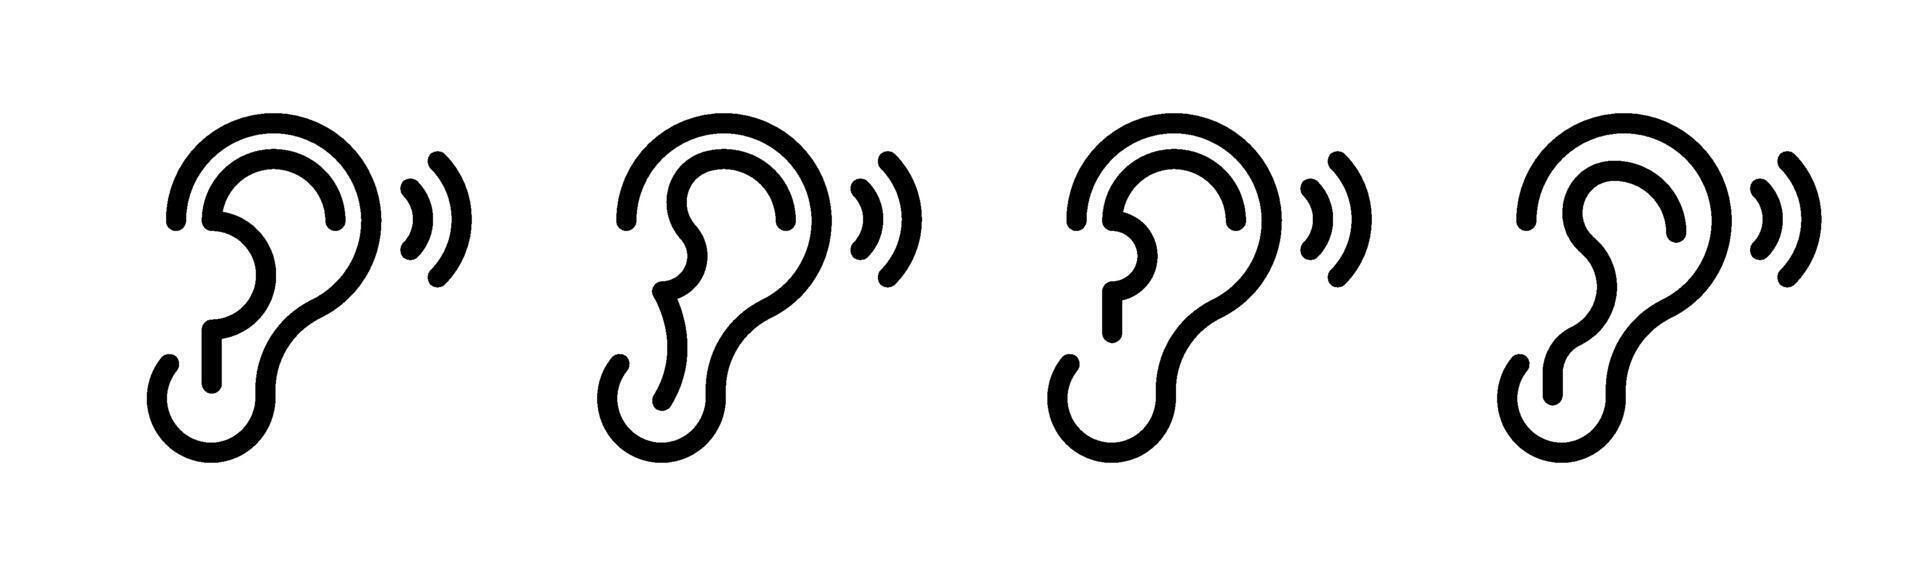 Ear listening icon. Listening symbols. Human sense hearing. Ear, hearing icon. Human ear organ icon. vector